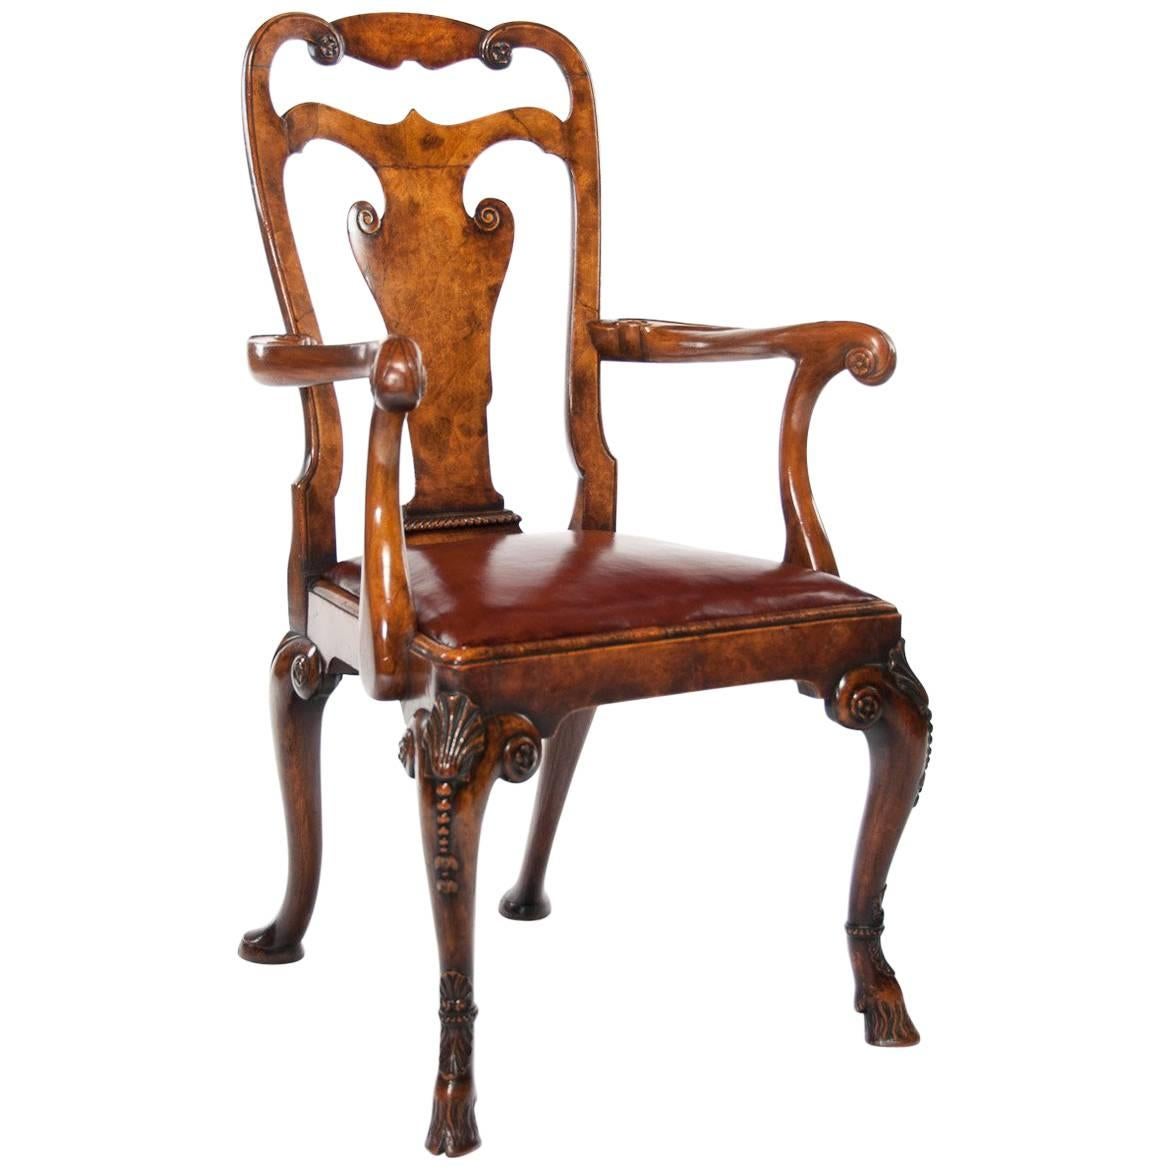 Superb Antique Walnut Desk Chair by Charles Tozer